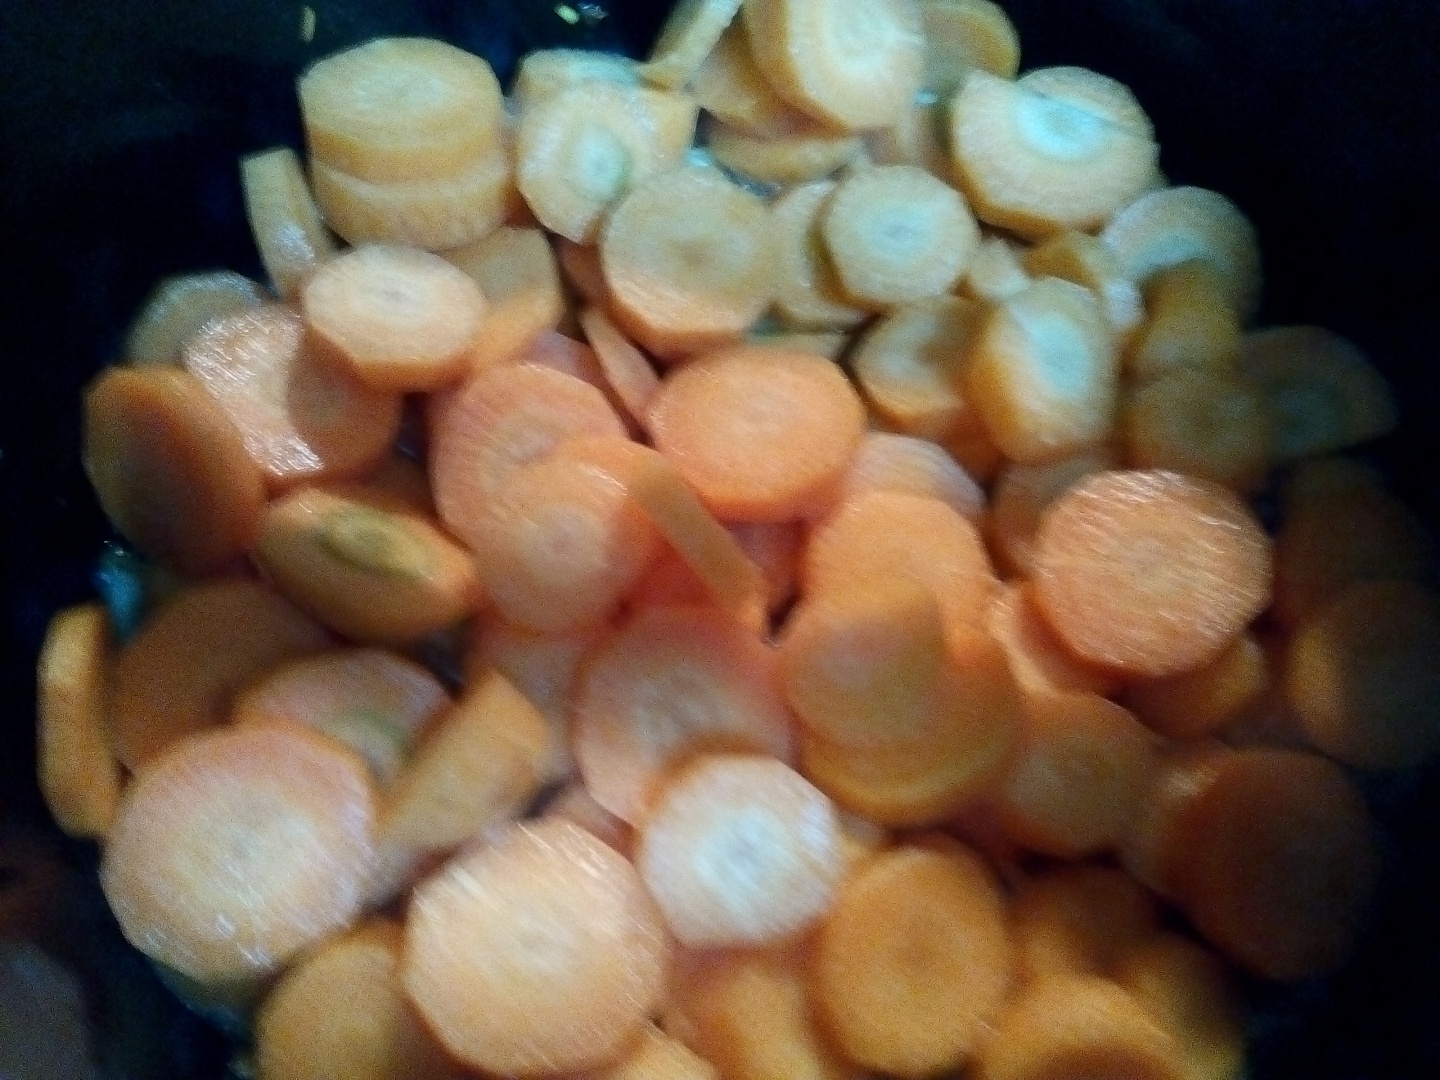 Supa crema de morcovi